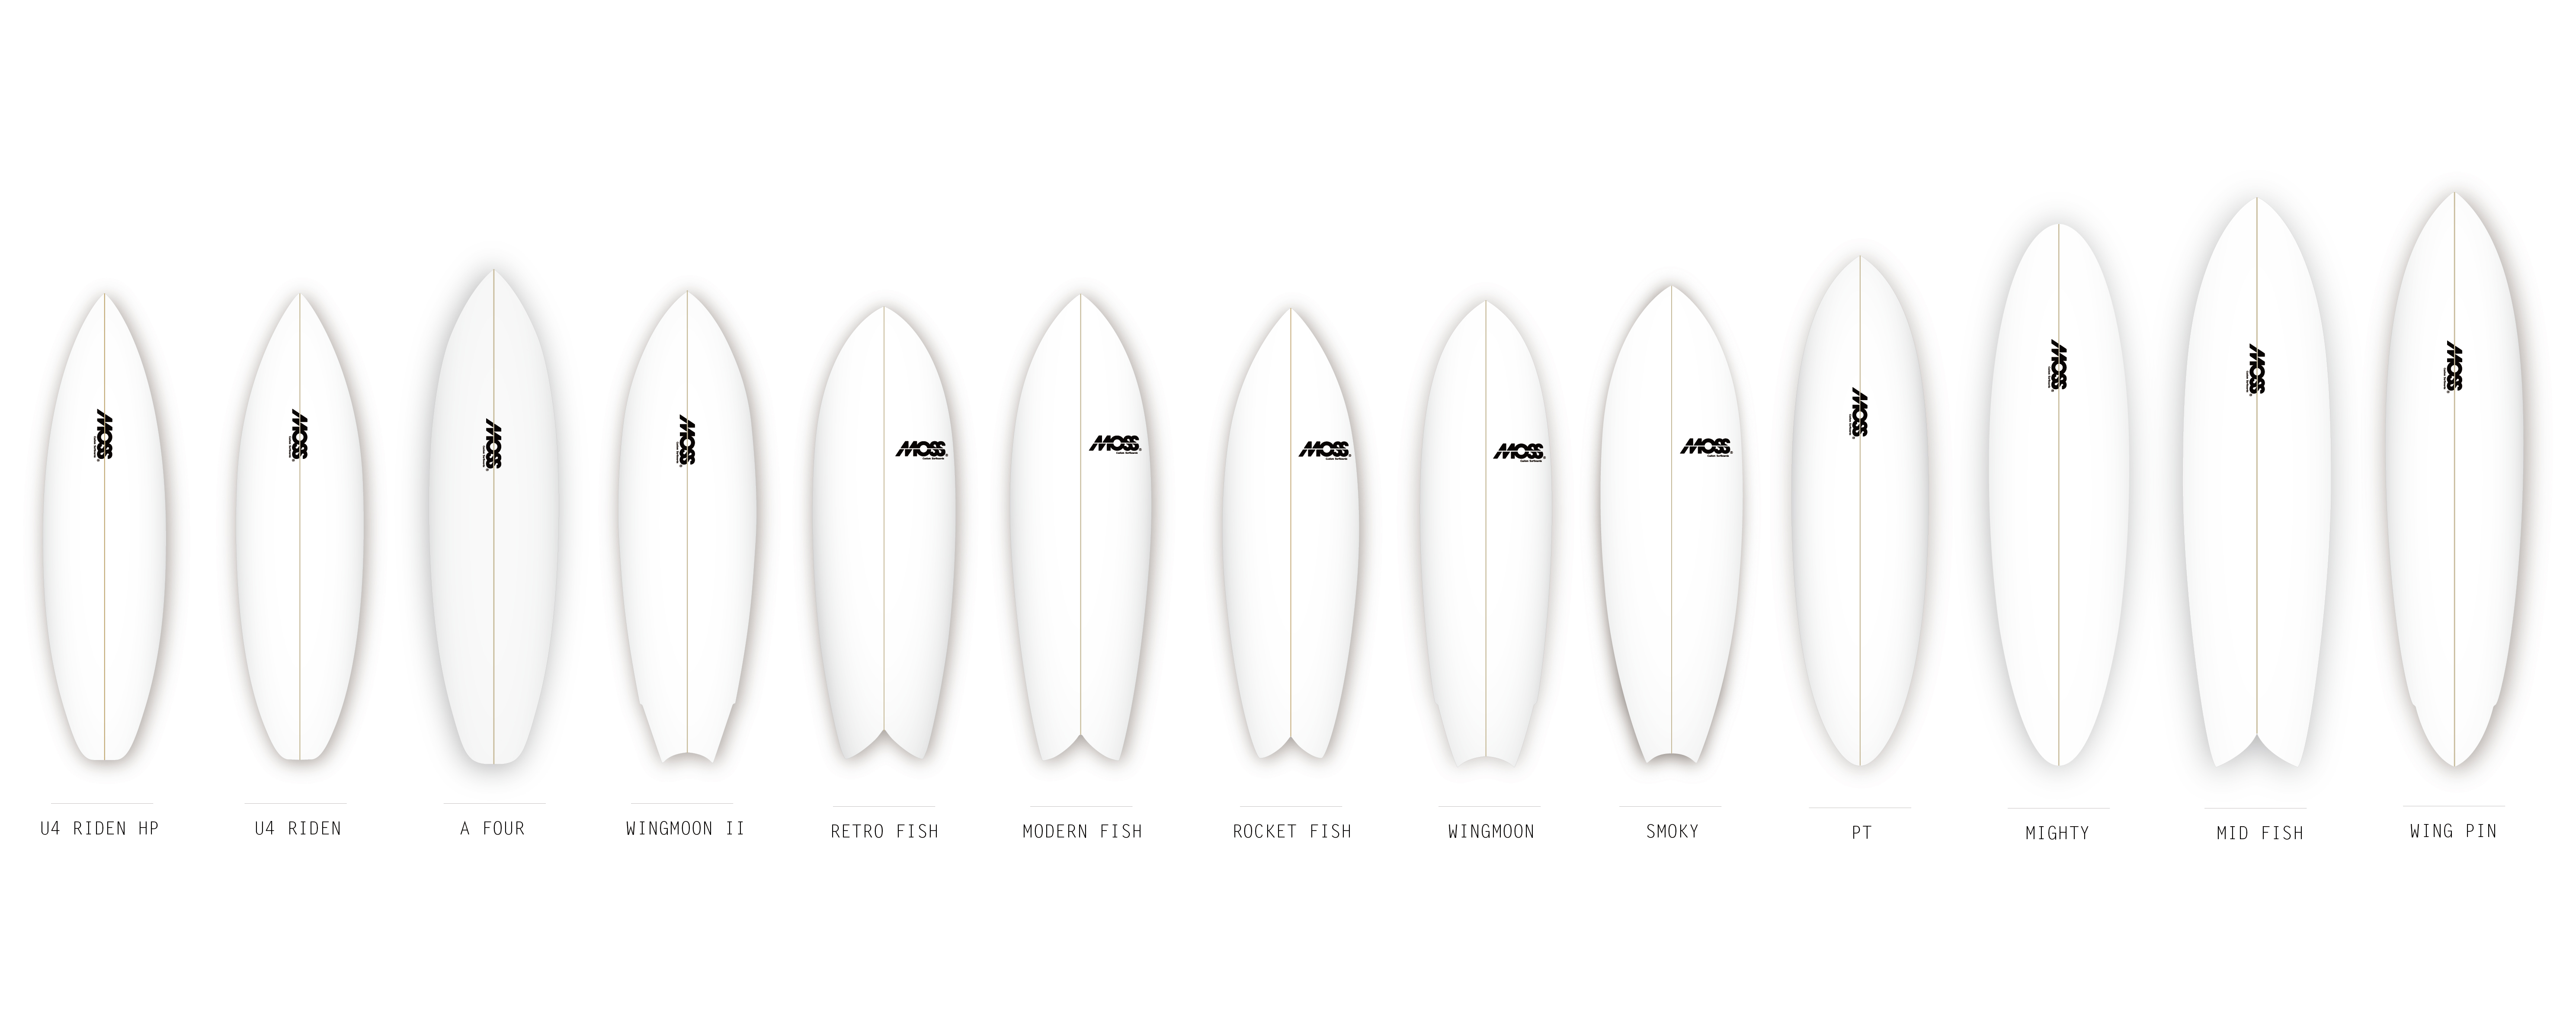 PIONEER MOSS CUSTOM SURFBOARDS 5'7 モス PU